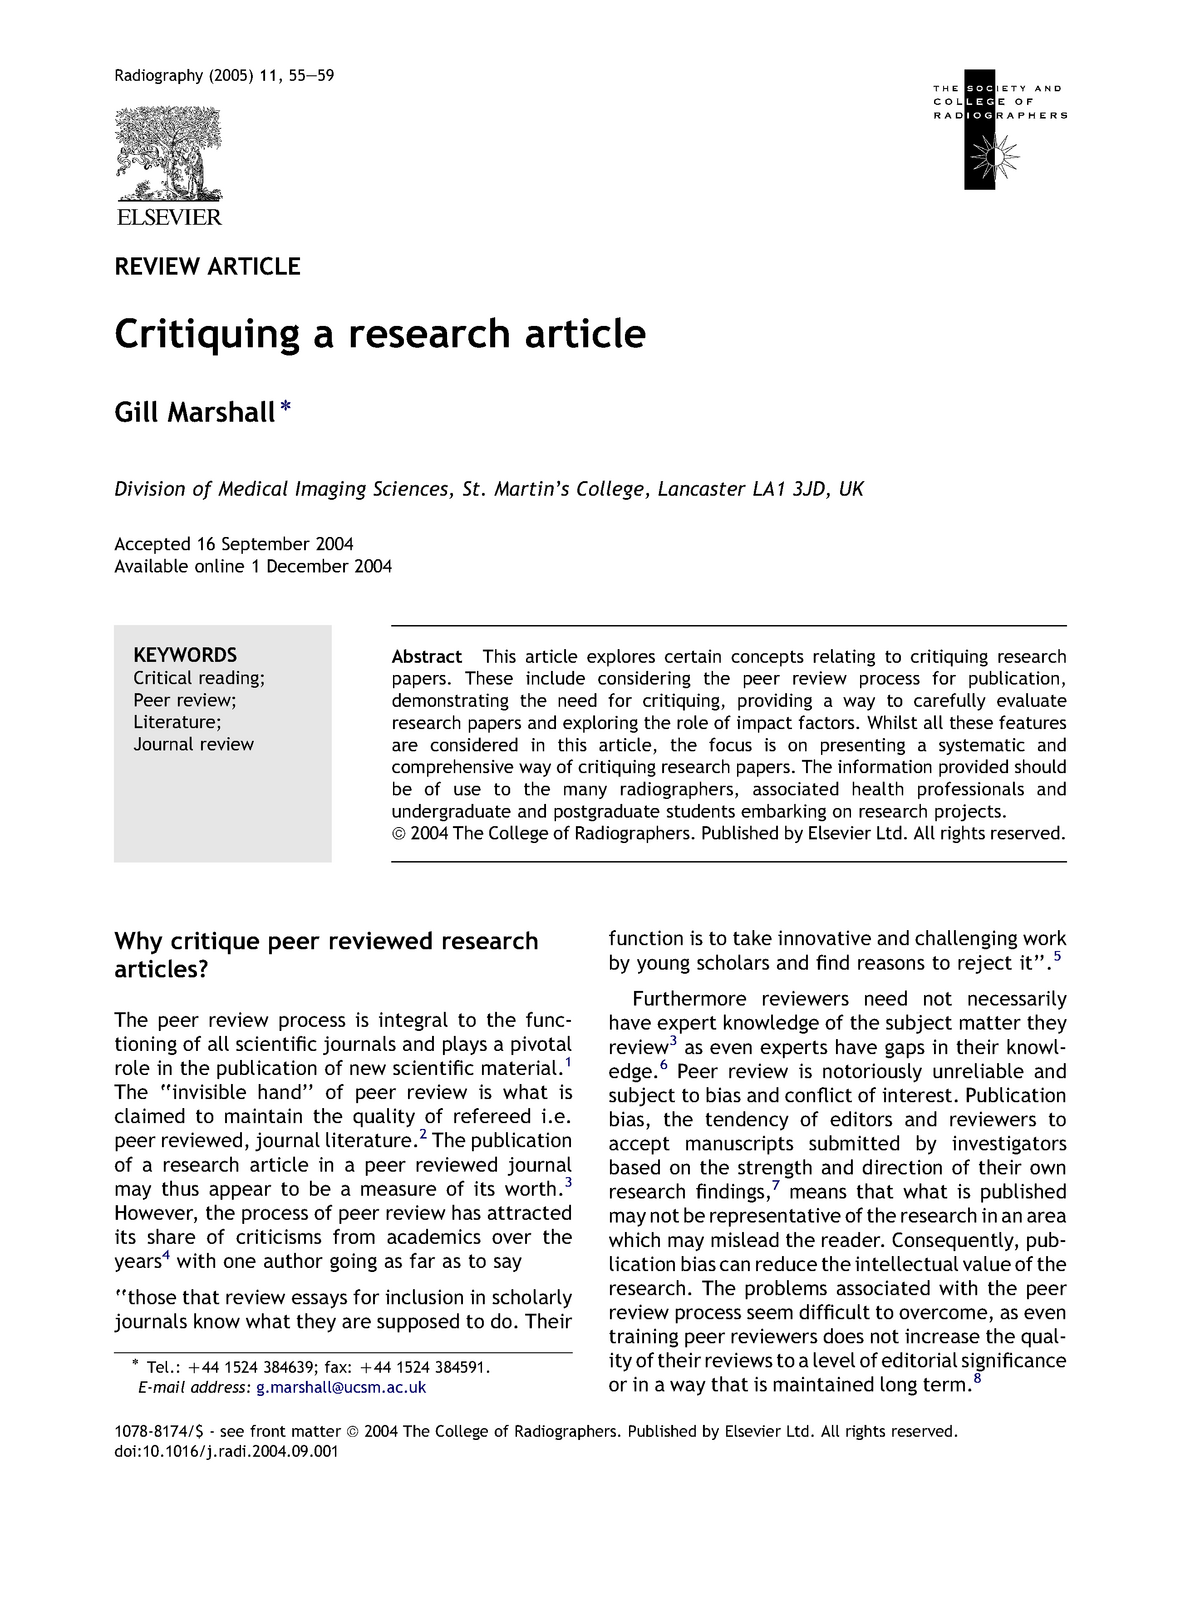 critiquing a nursing research article